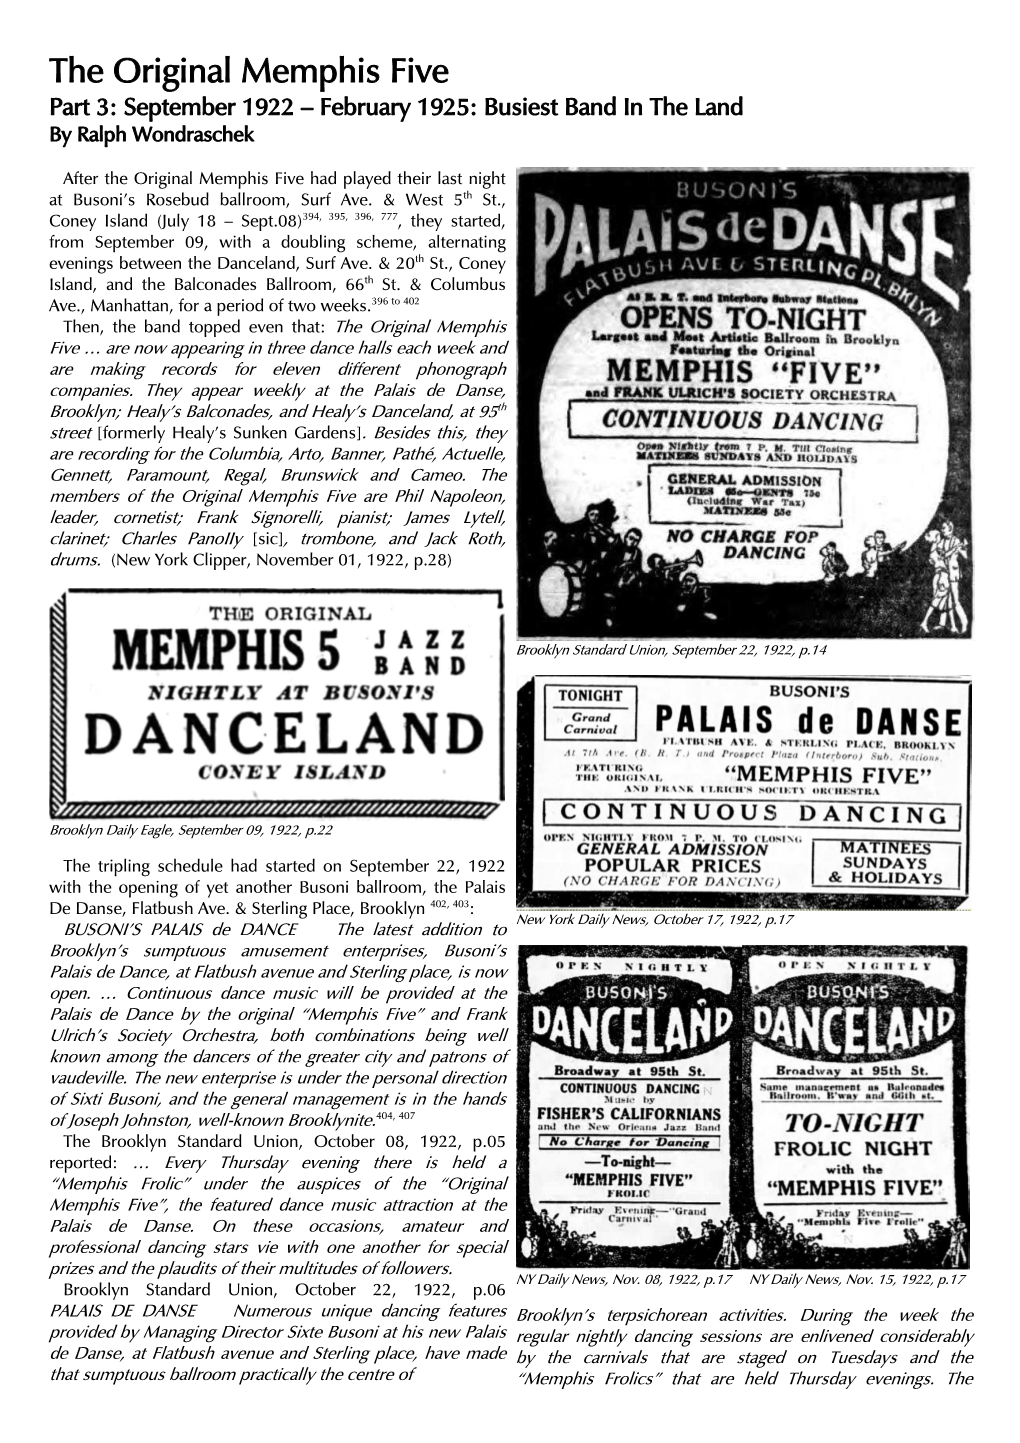 The Original Memphis Five Part 3: September 1922 – February 1925 : Busiest Band in the Land by Ralph Wondraschek